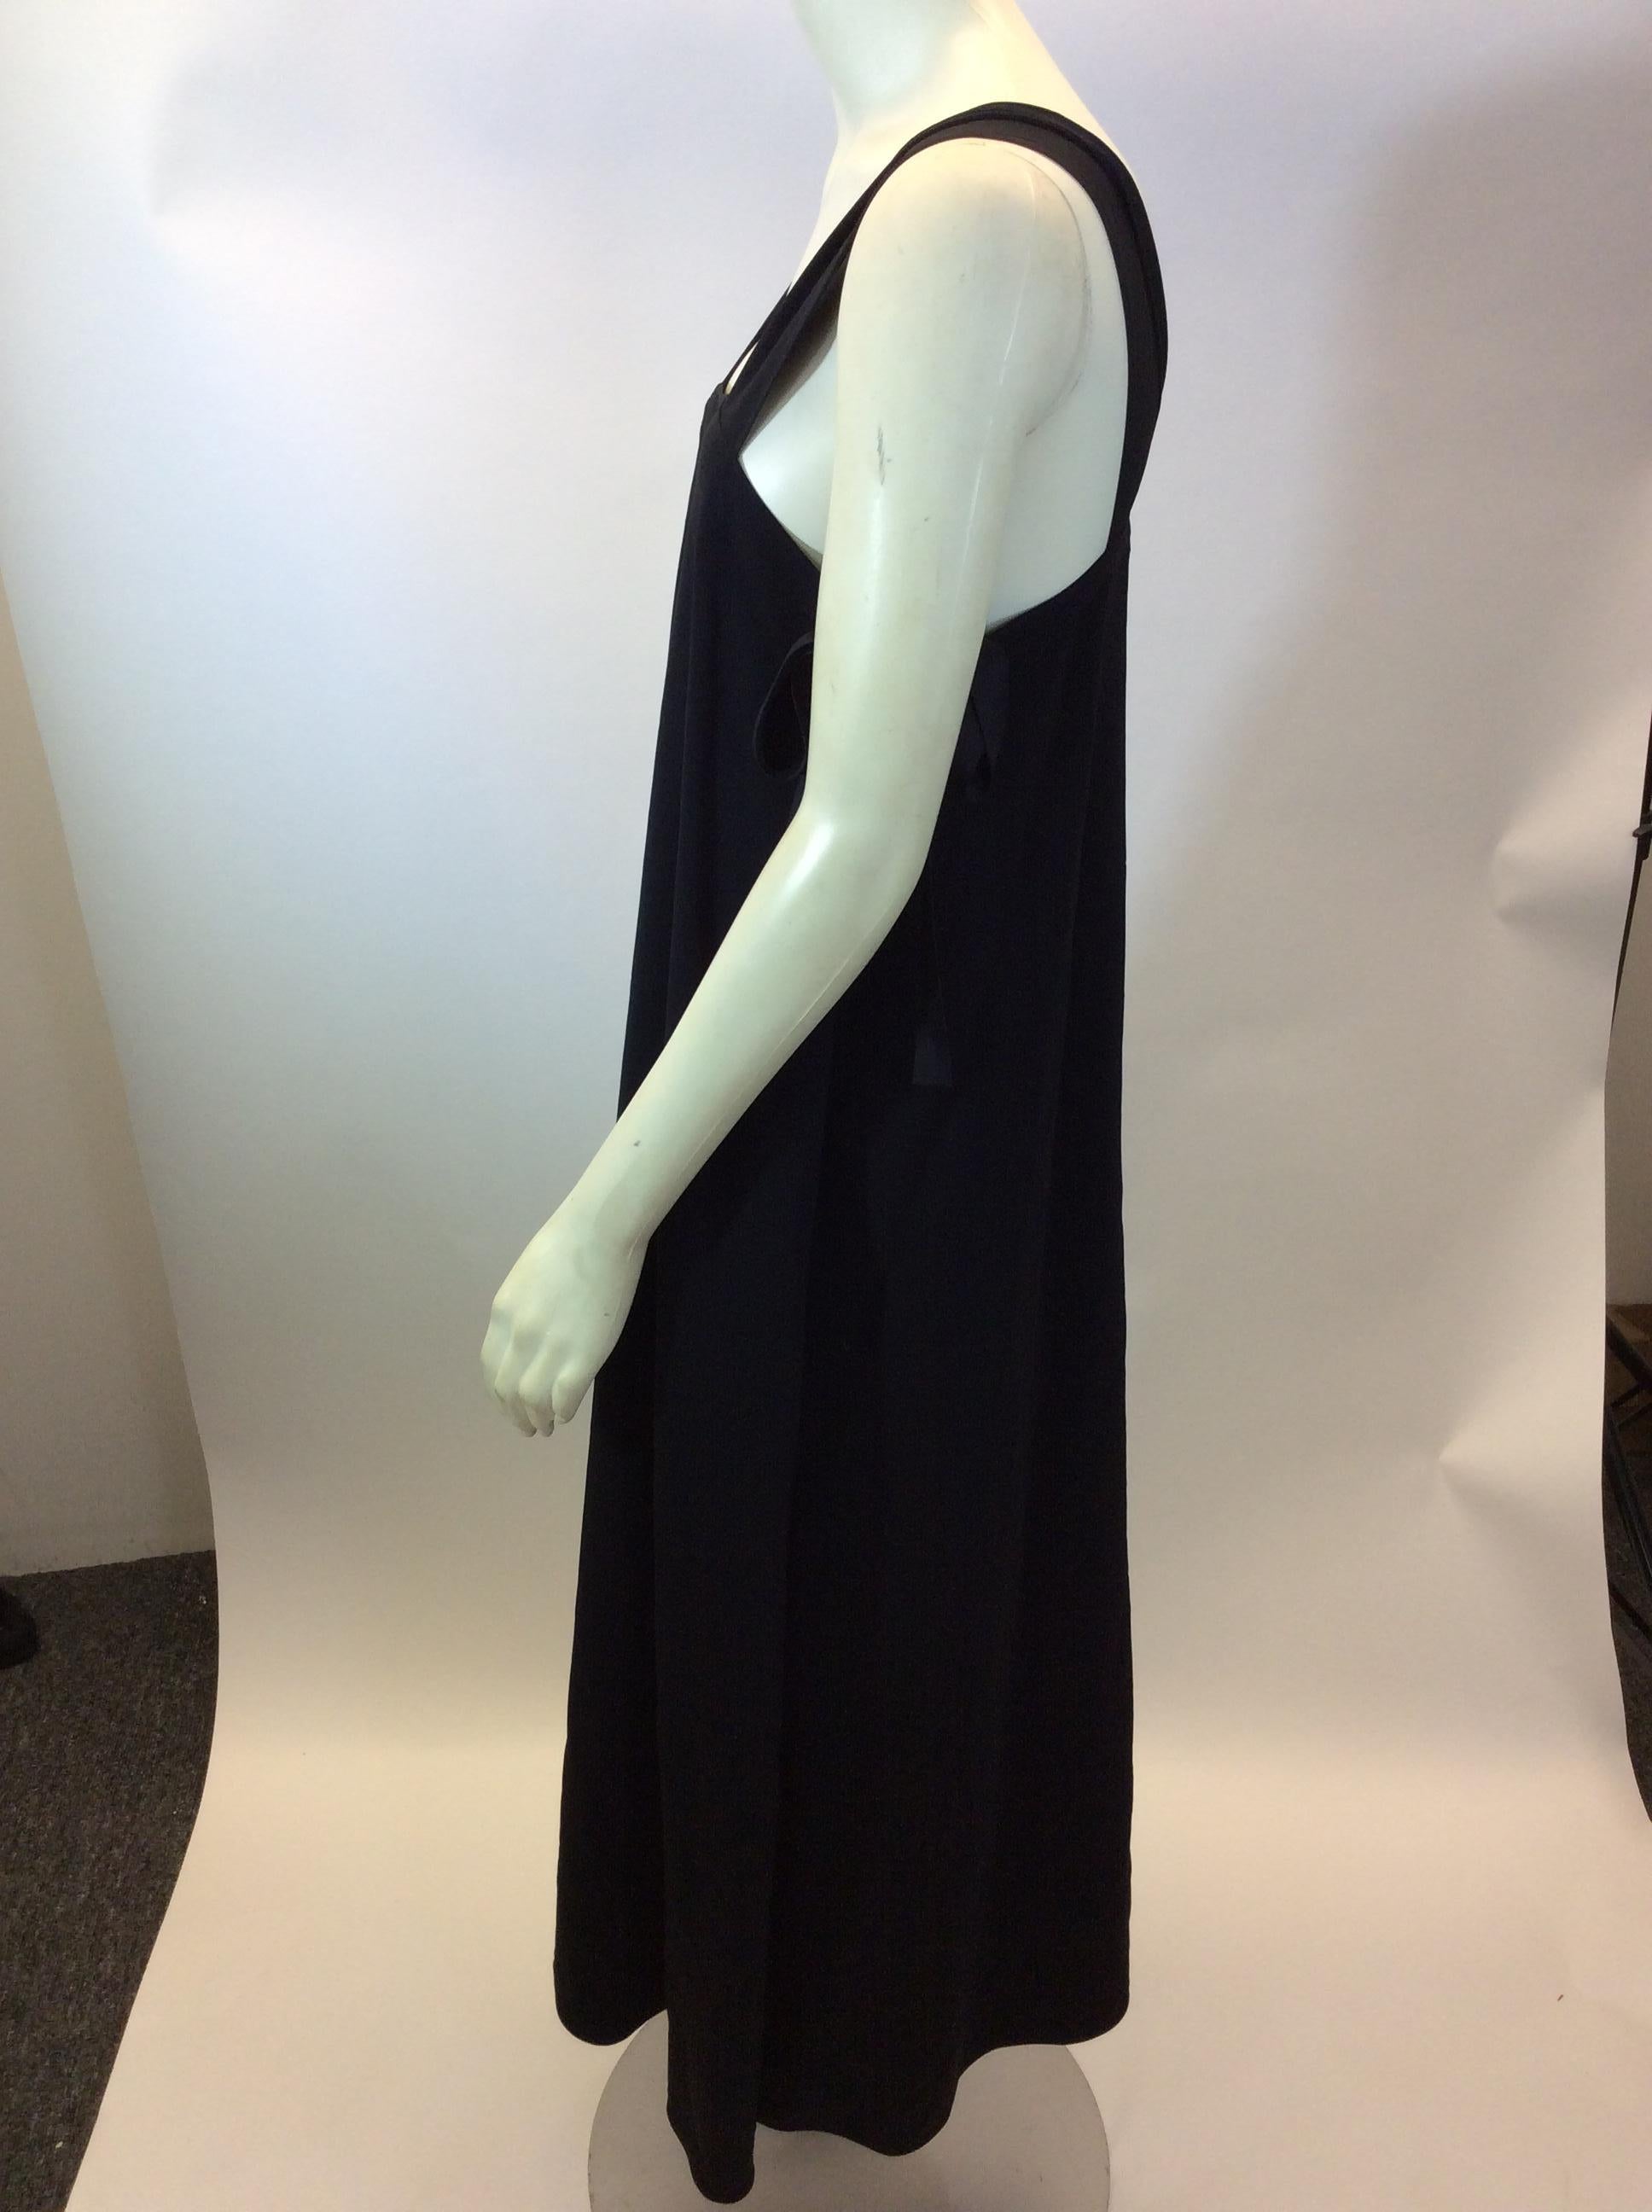 Helmut Lang Black Dress
$250
Made in China
54% Viscose, 46% Acetate
Size Medium
Length 47